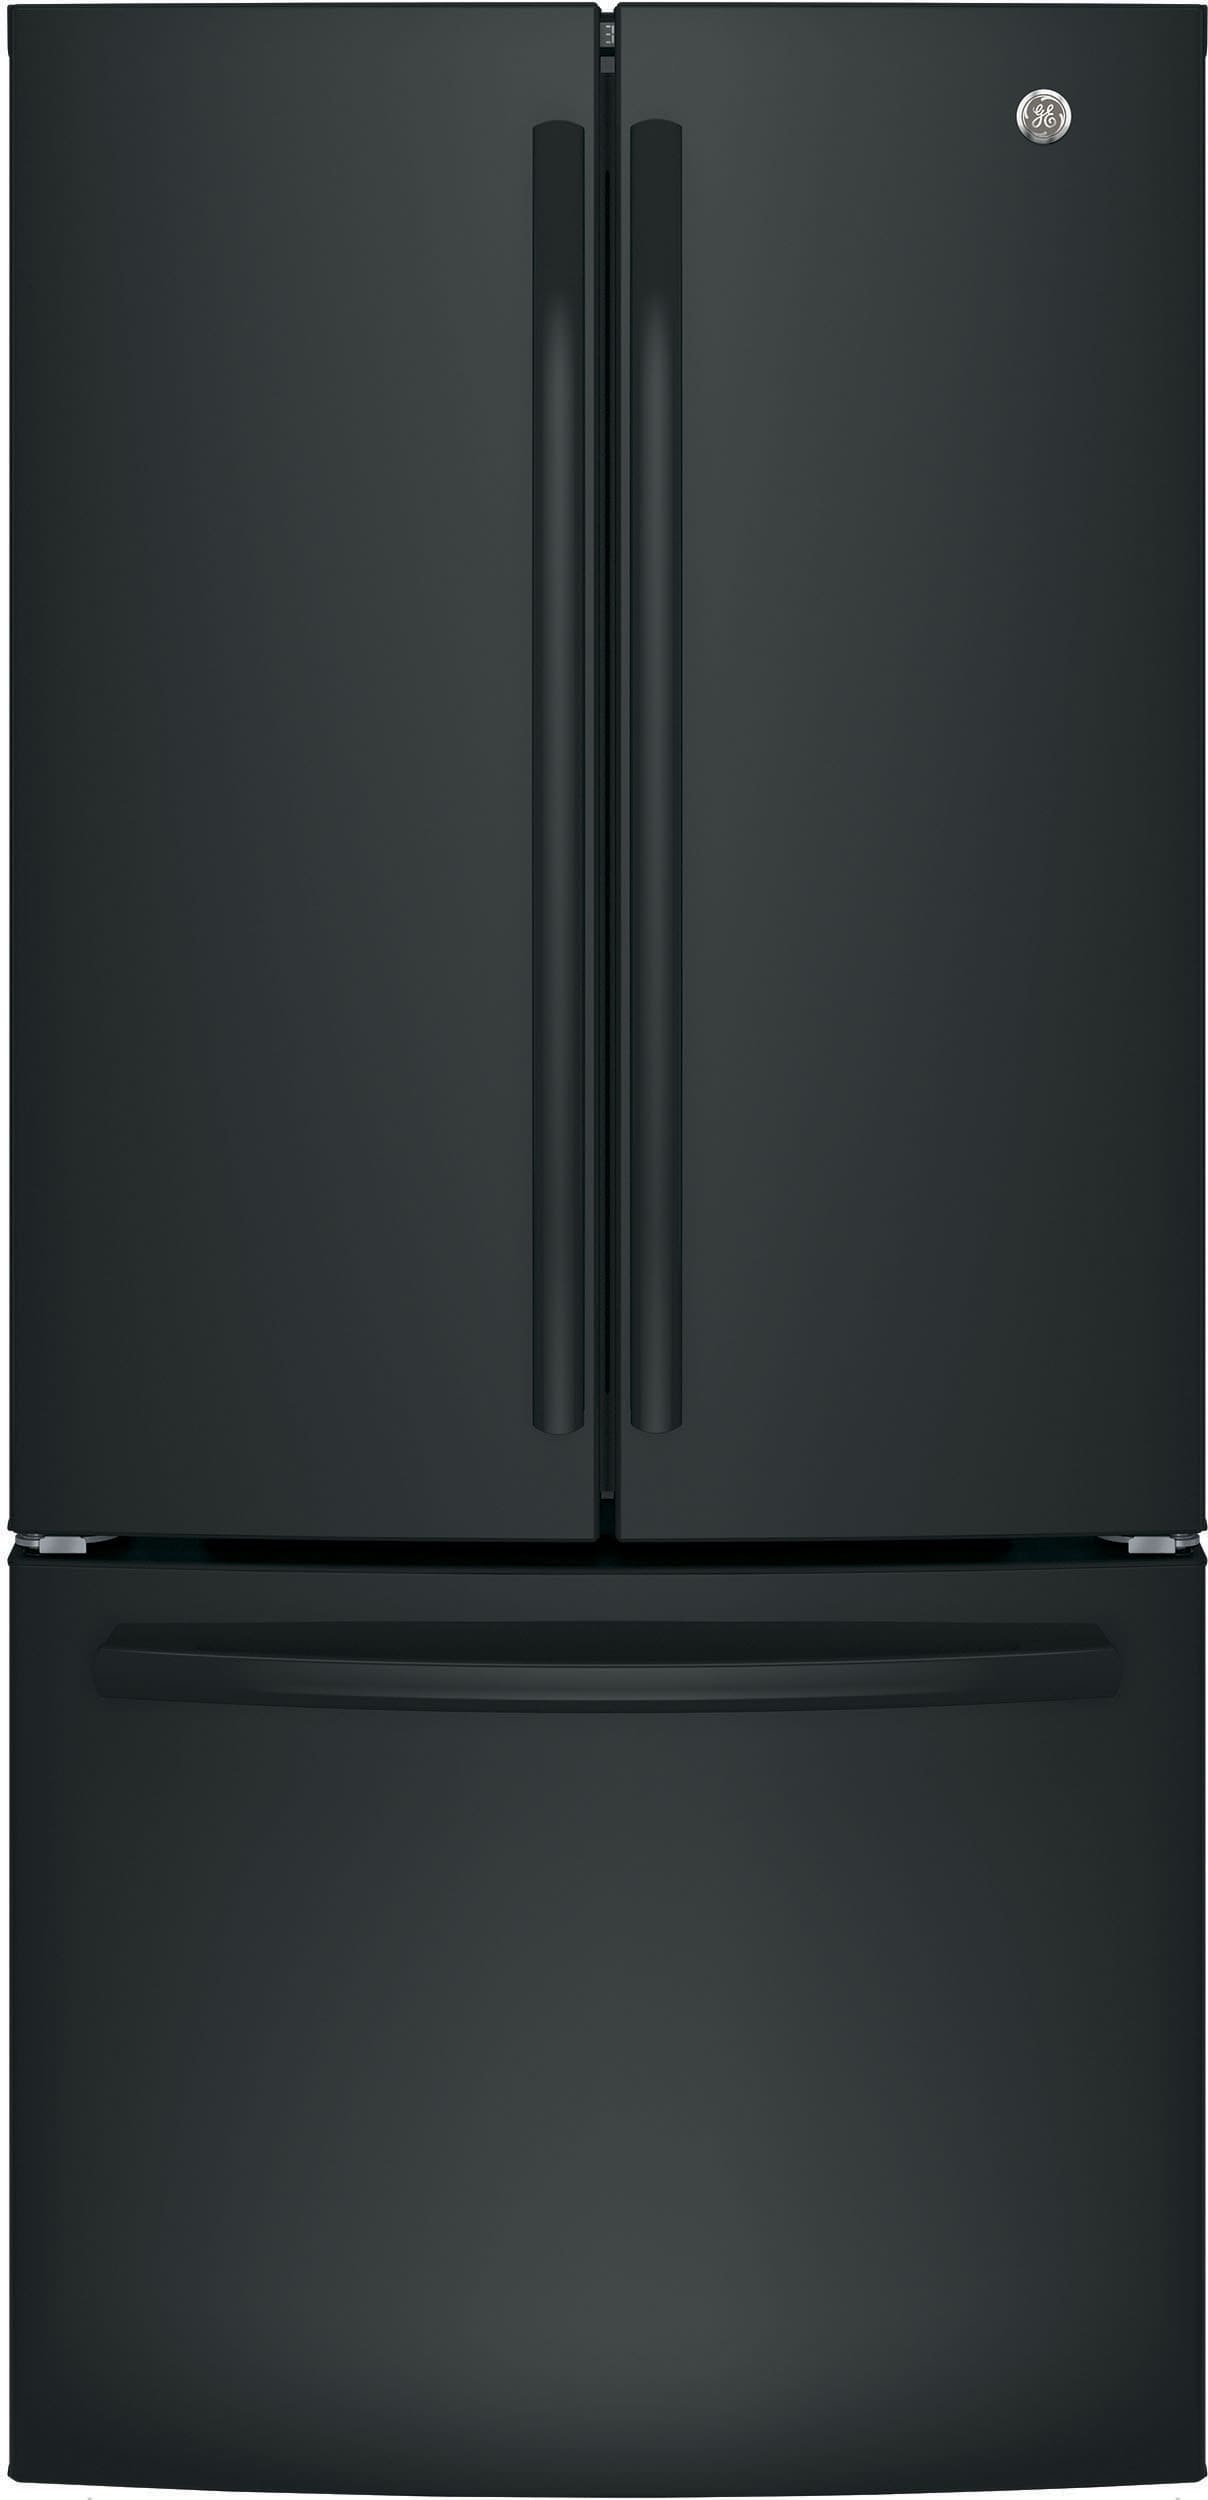 33 Inch French Door Refrigerator